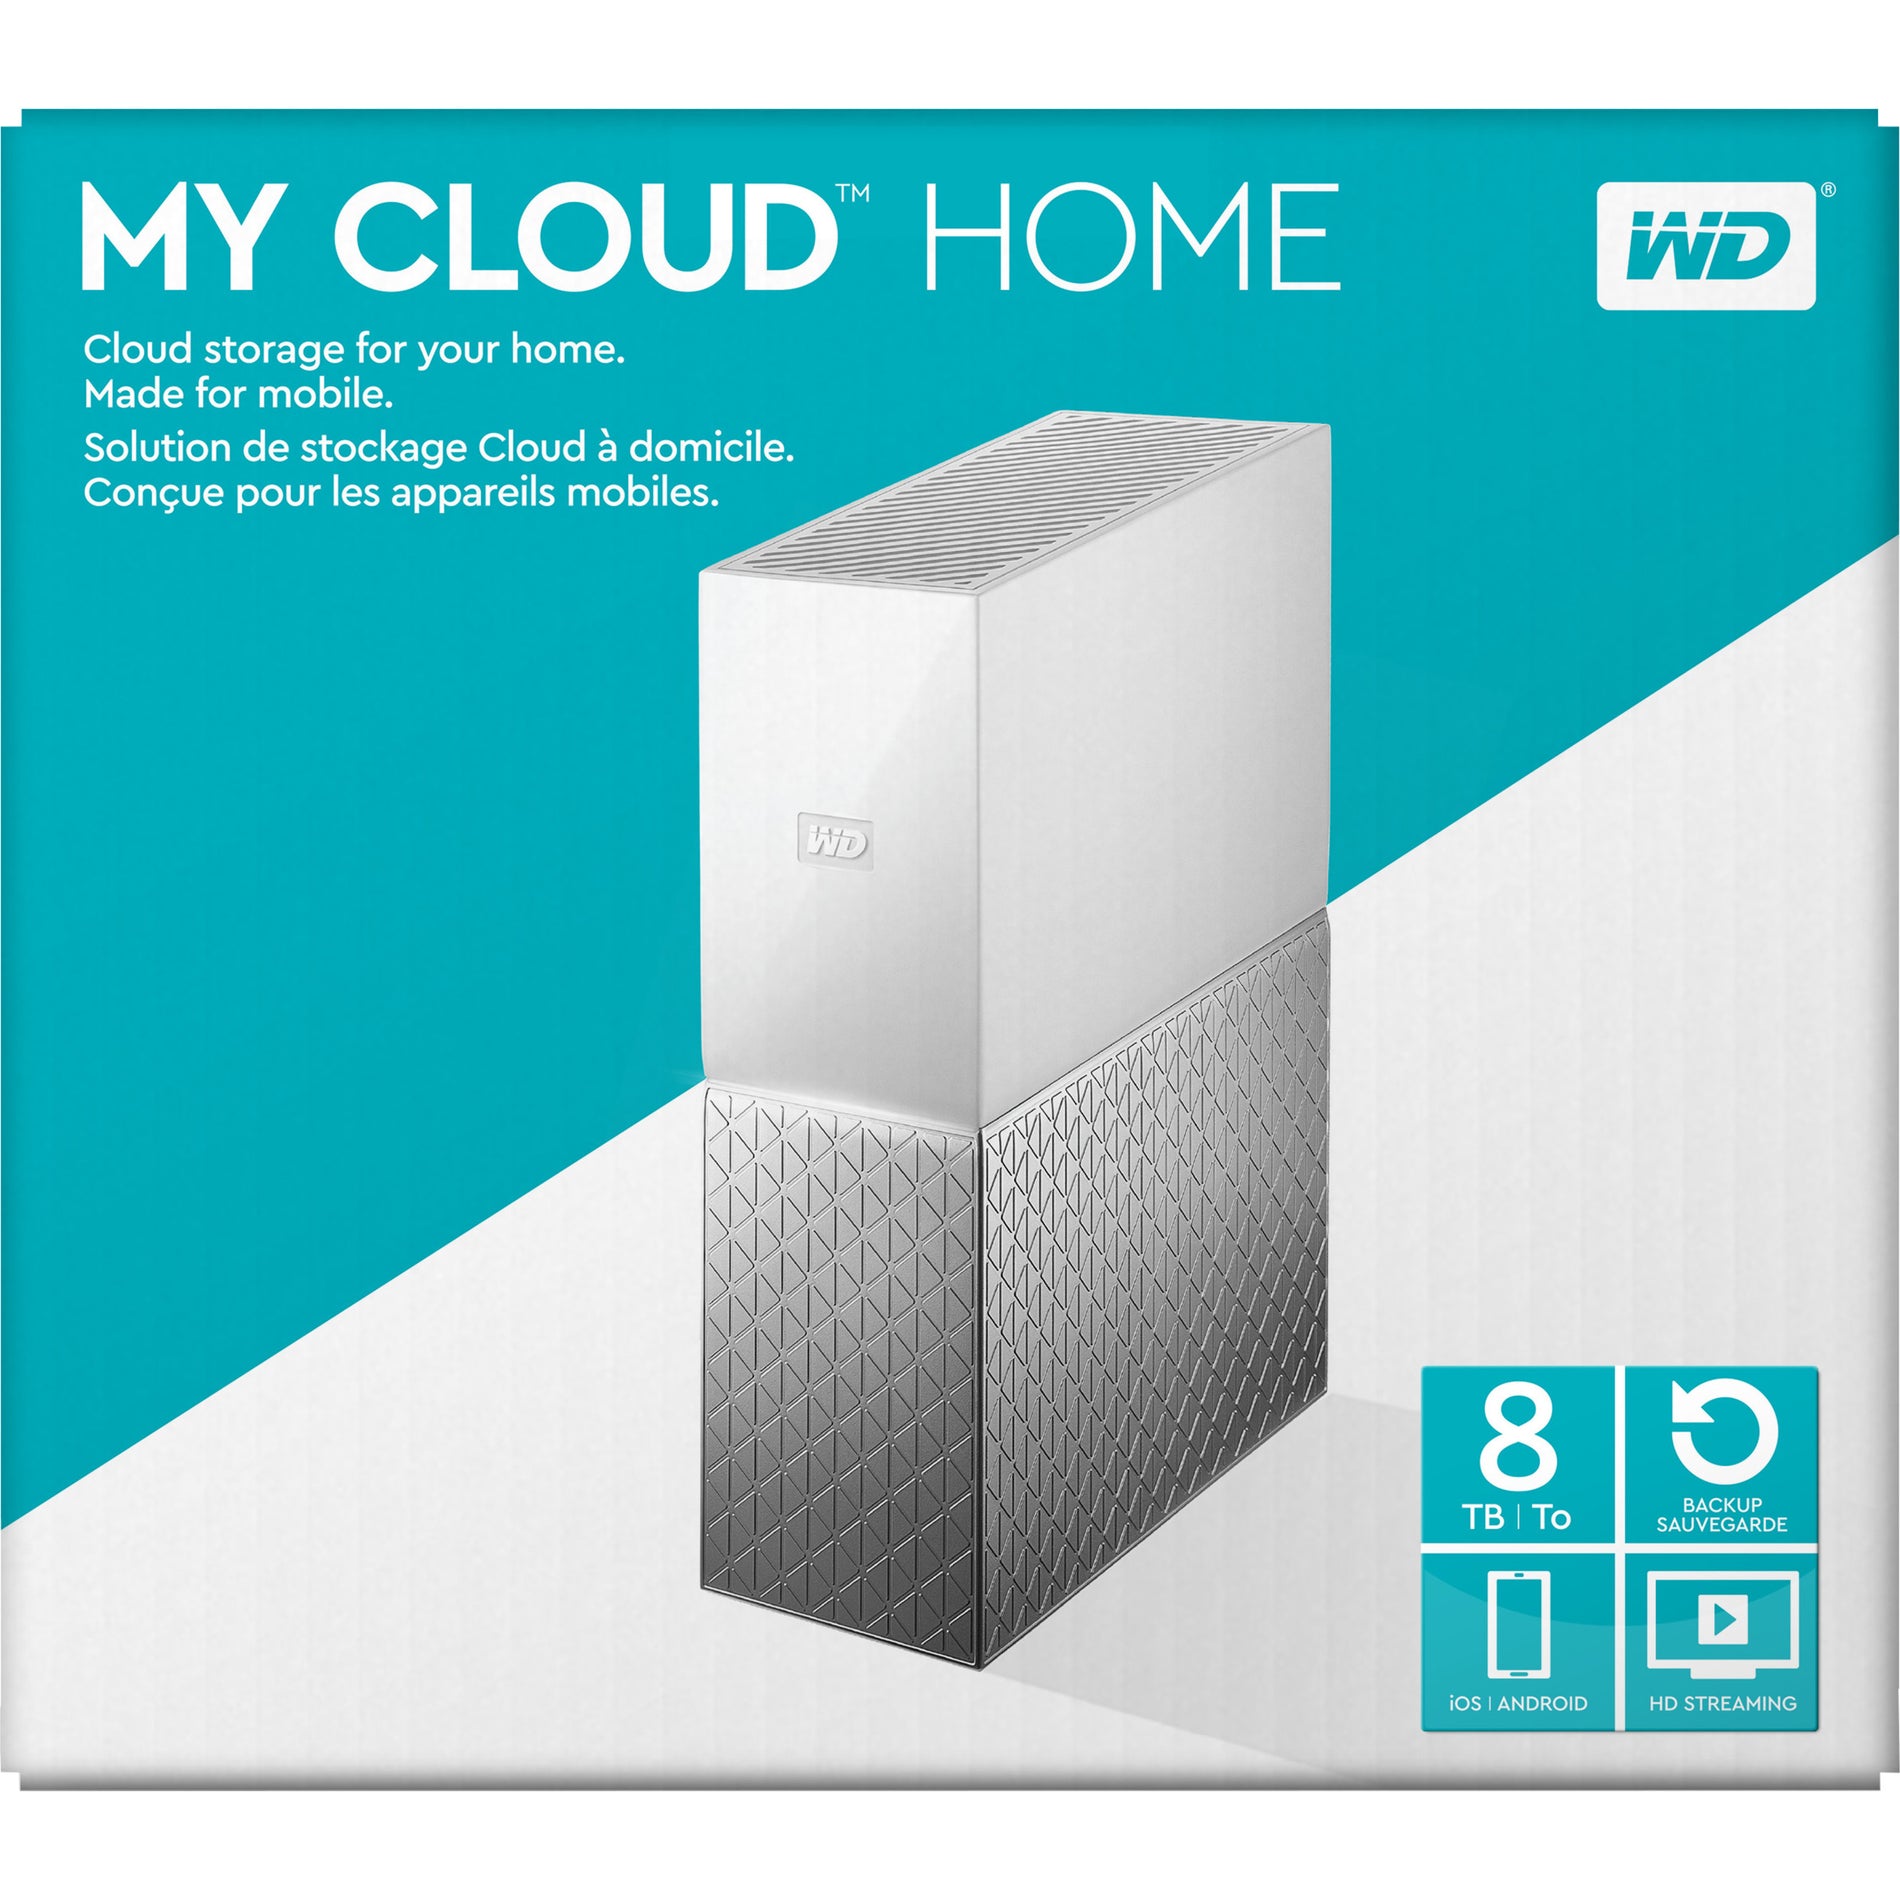 WD WDBVXC0080HWT-NESN My Cloud Home Personal Cloud Storage, 8 TB Capacity, 2 Year Warranty